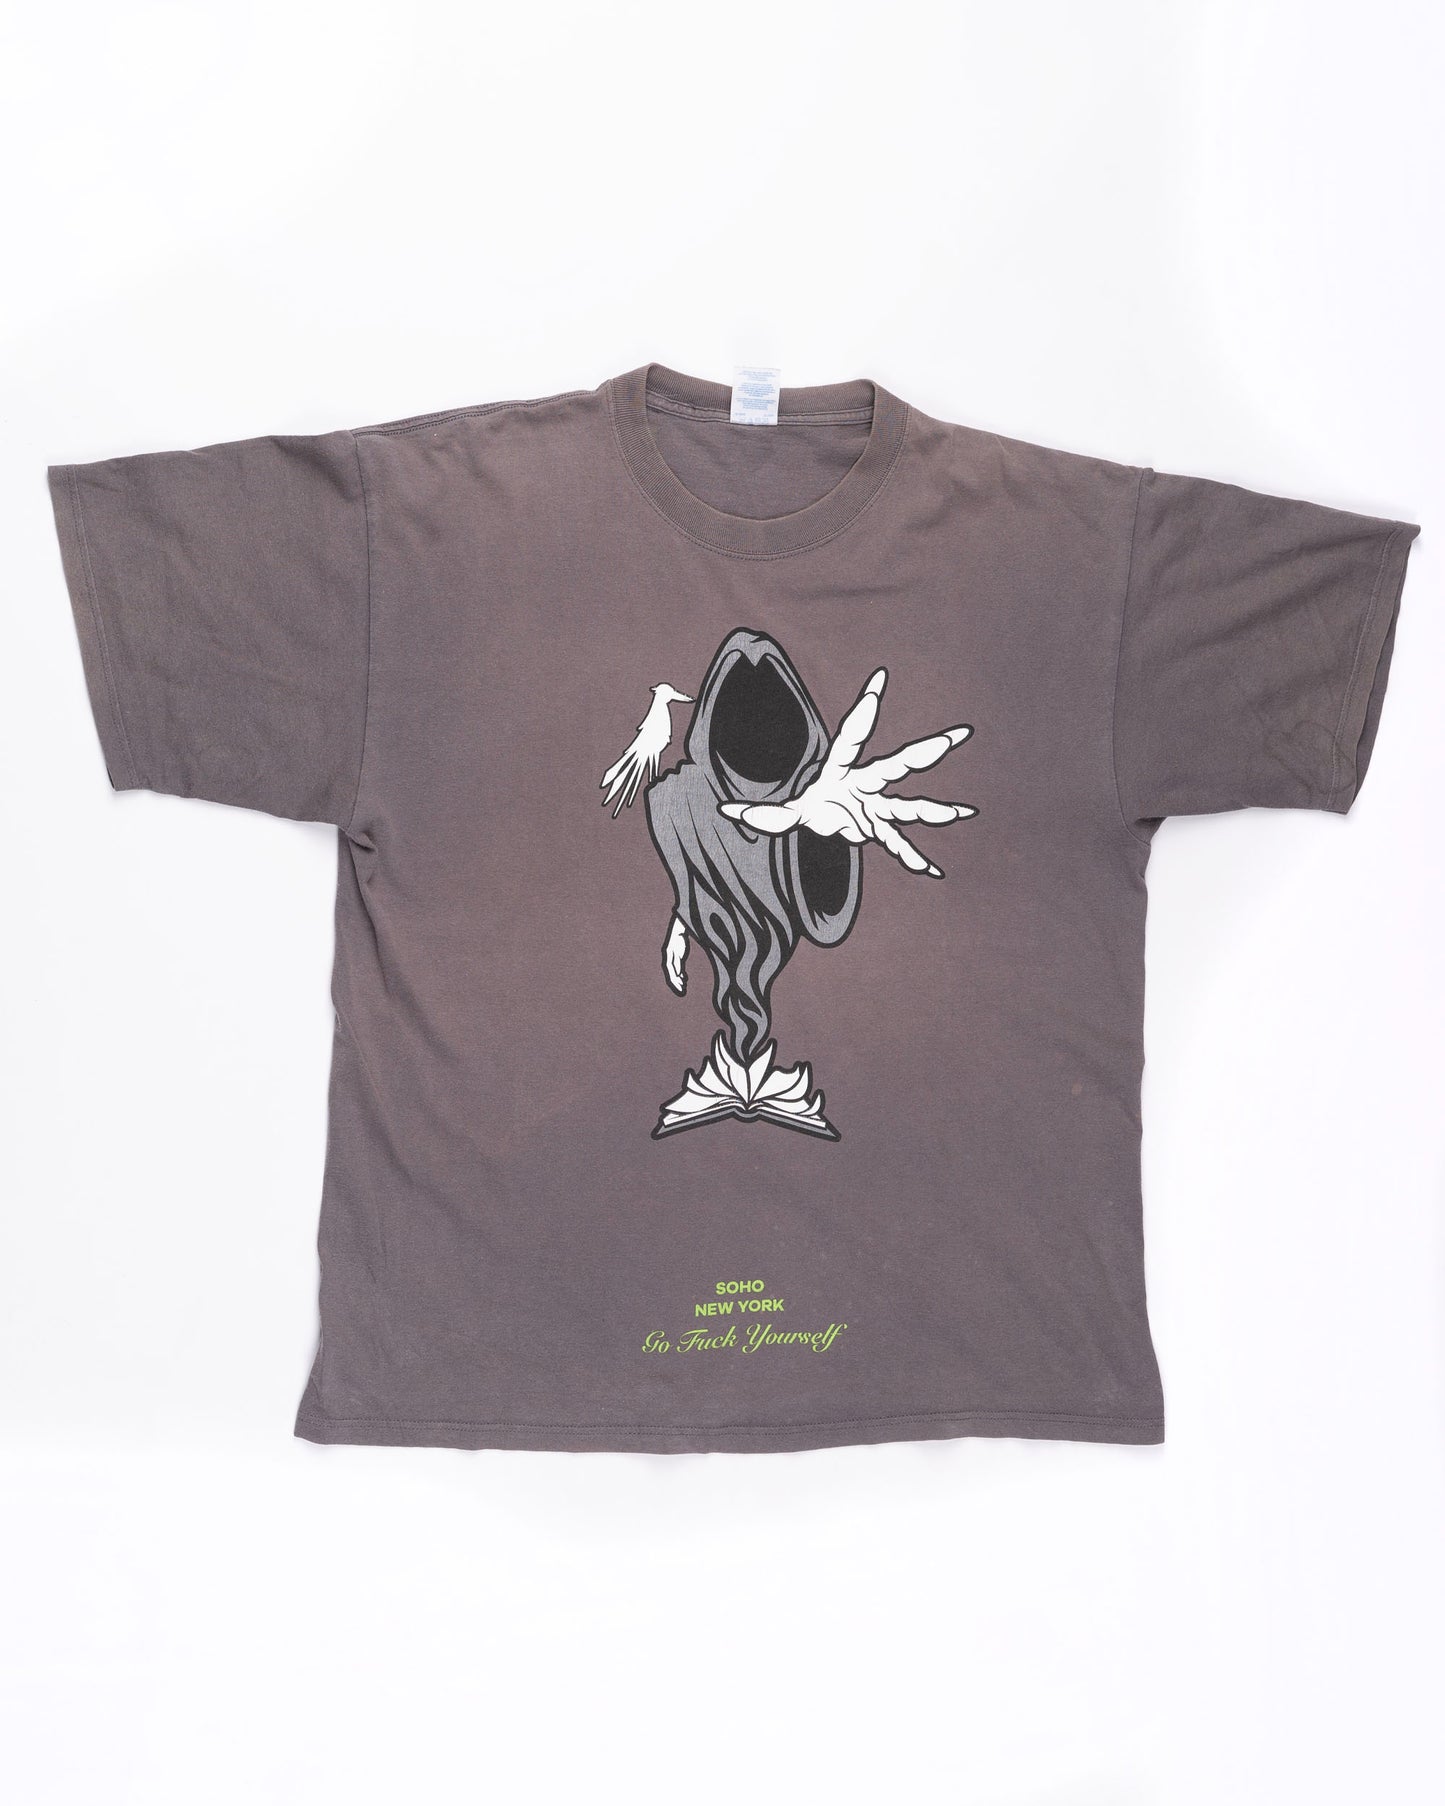 Grim Reaper T-Shirt Size: XLarge